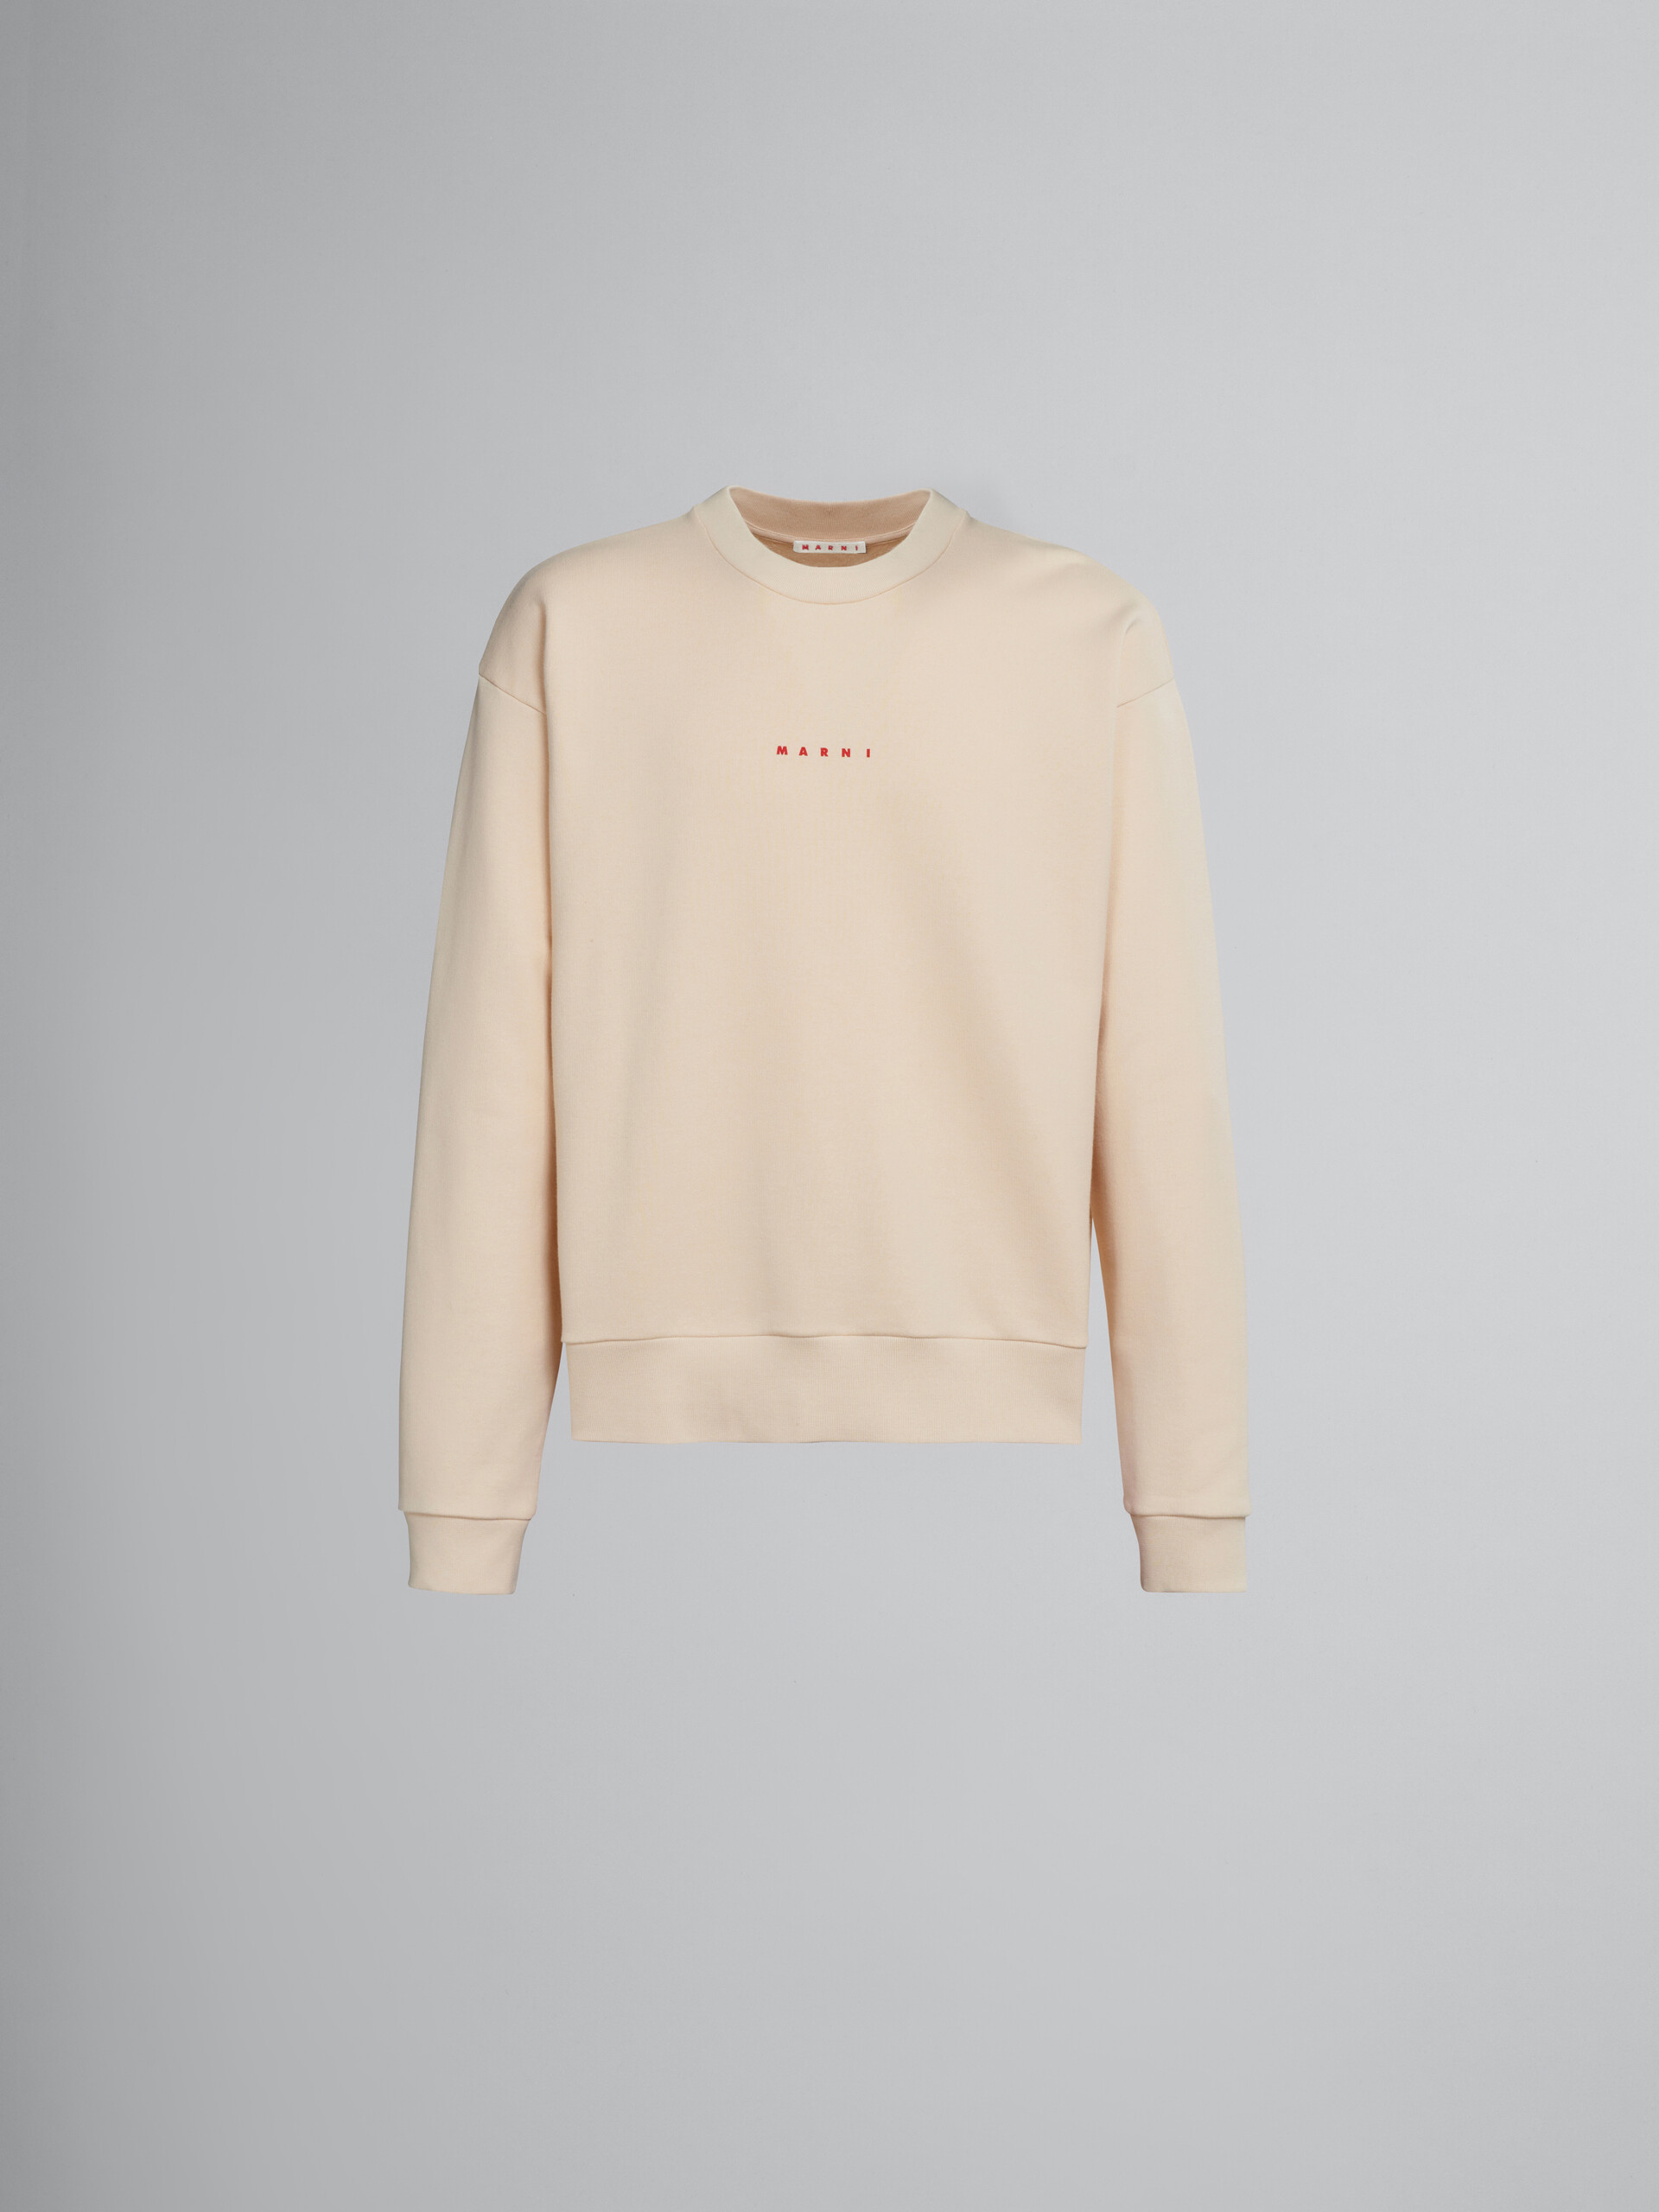 Ivory sweatshirt with logo - Sweaters - Image 1